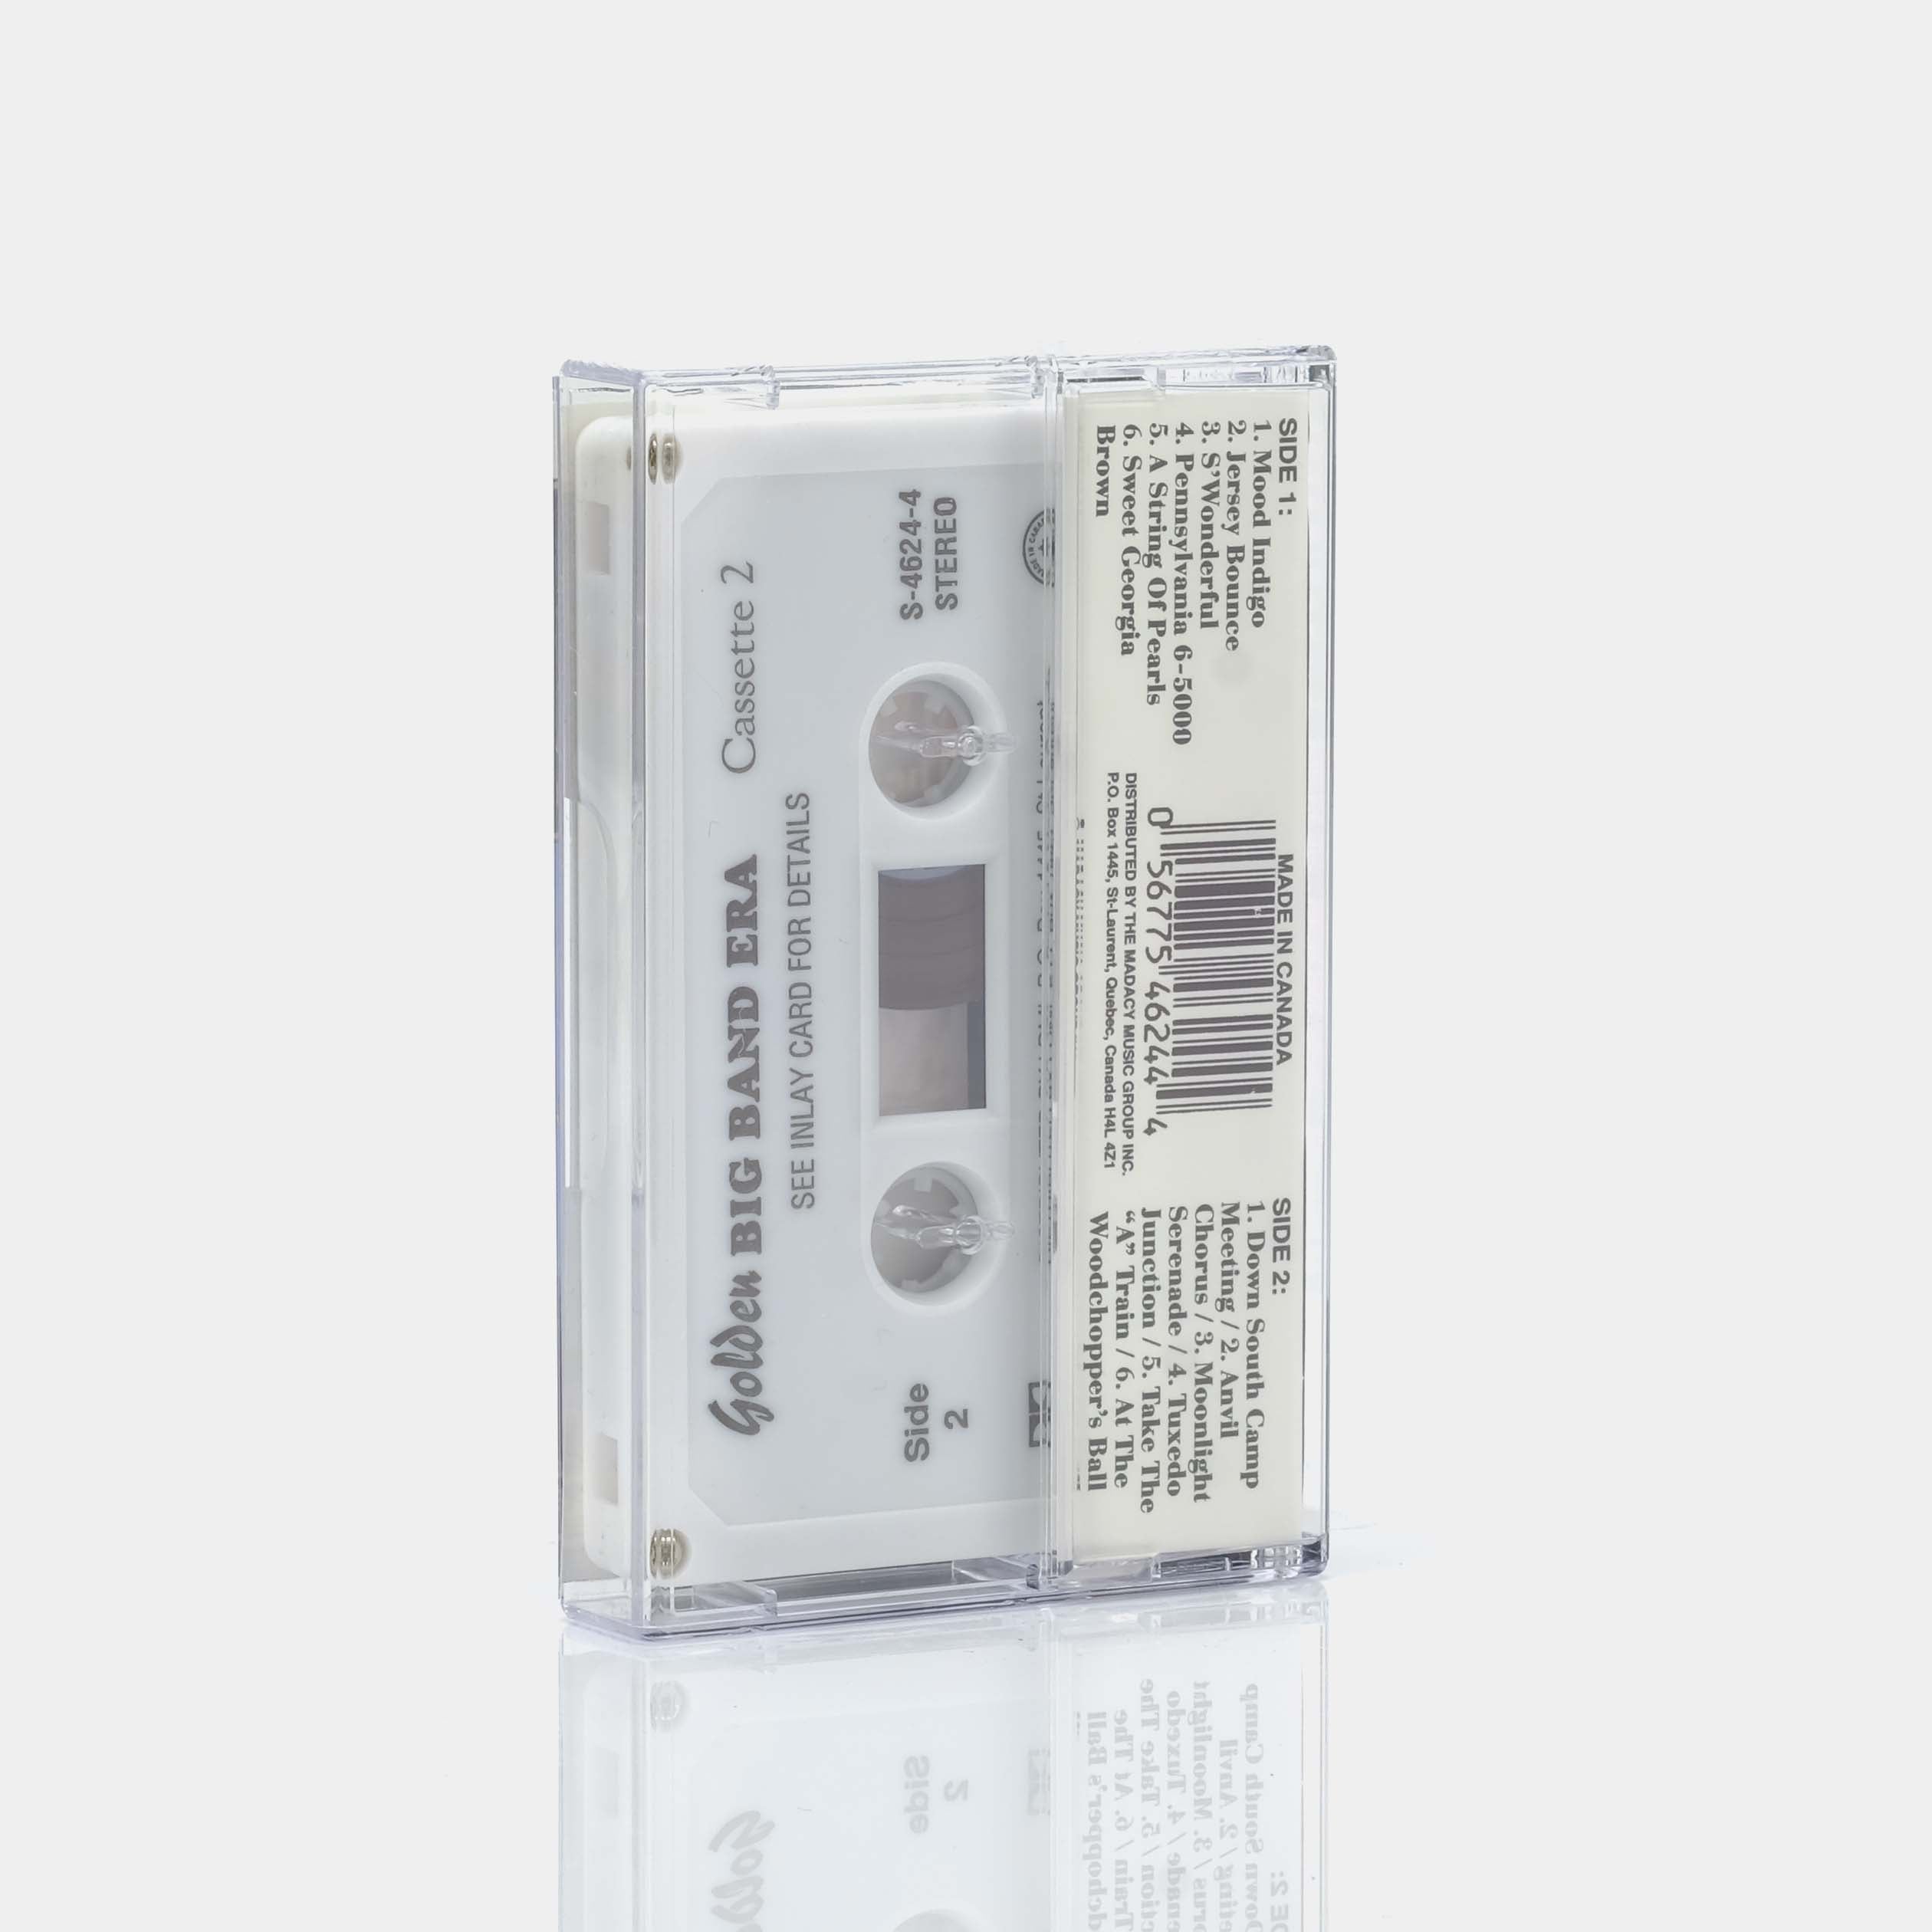 The BBC Orchestra - Golden Big Band Era (Tape 2) Cassette Tape